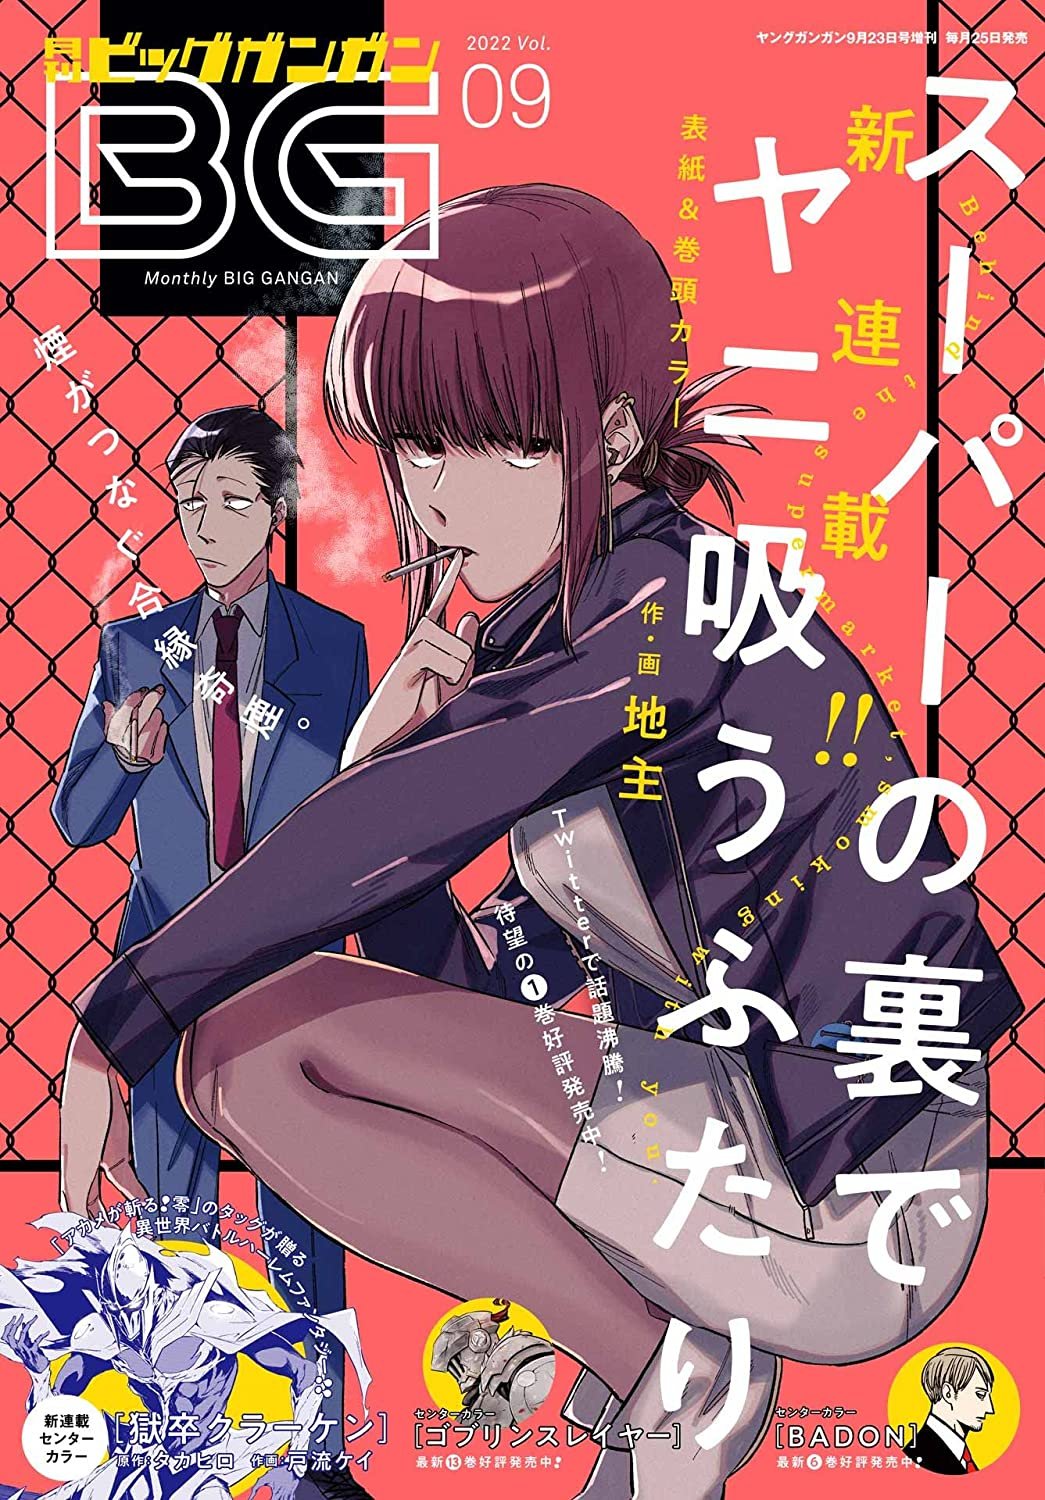 Manga Mogura RE (Manga & Anime News) on X: Smoking x Romance Super no Ura  de Yani Suu Futari by Jinushi is on the cover of upcoming Big Gangan issue  9/2022 to